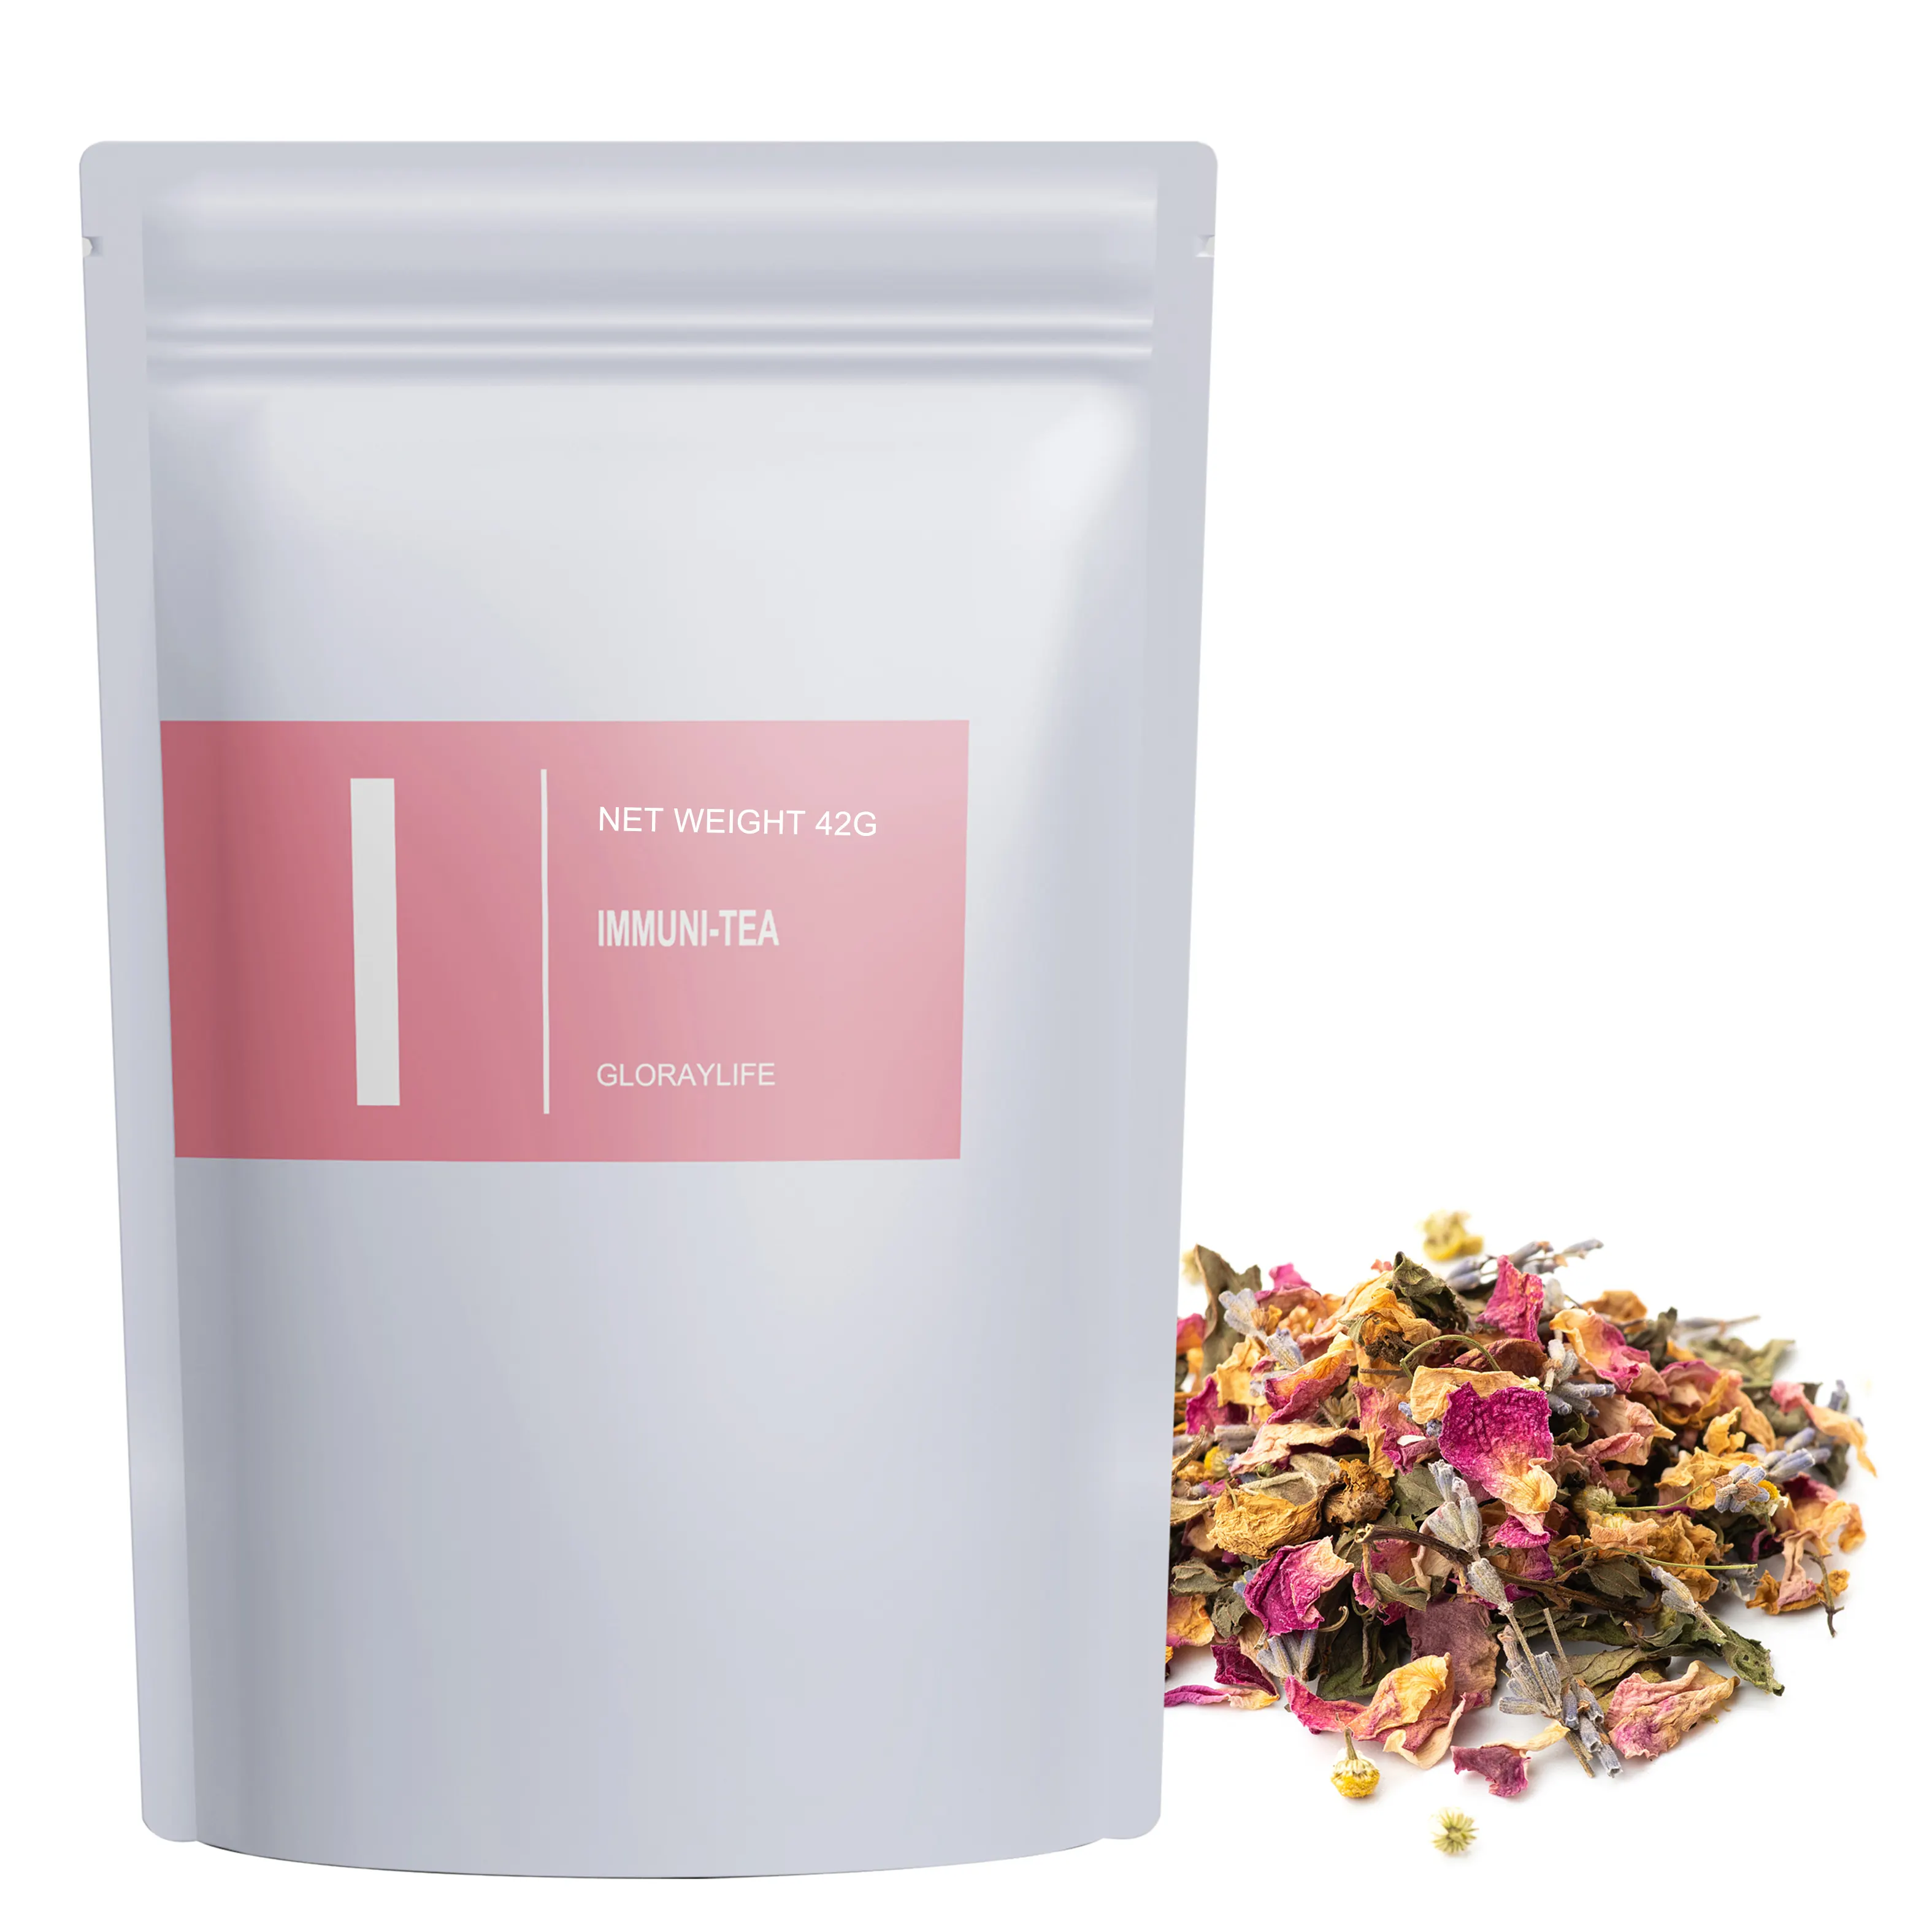 Our Immune Tea Help Keep You Feeling Fresh Rejuvenated and Energised 14 Day Supply Immune Booster Tasty Blend of Herbs OEM